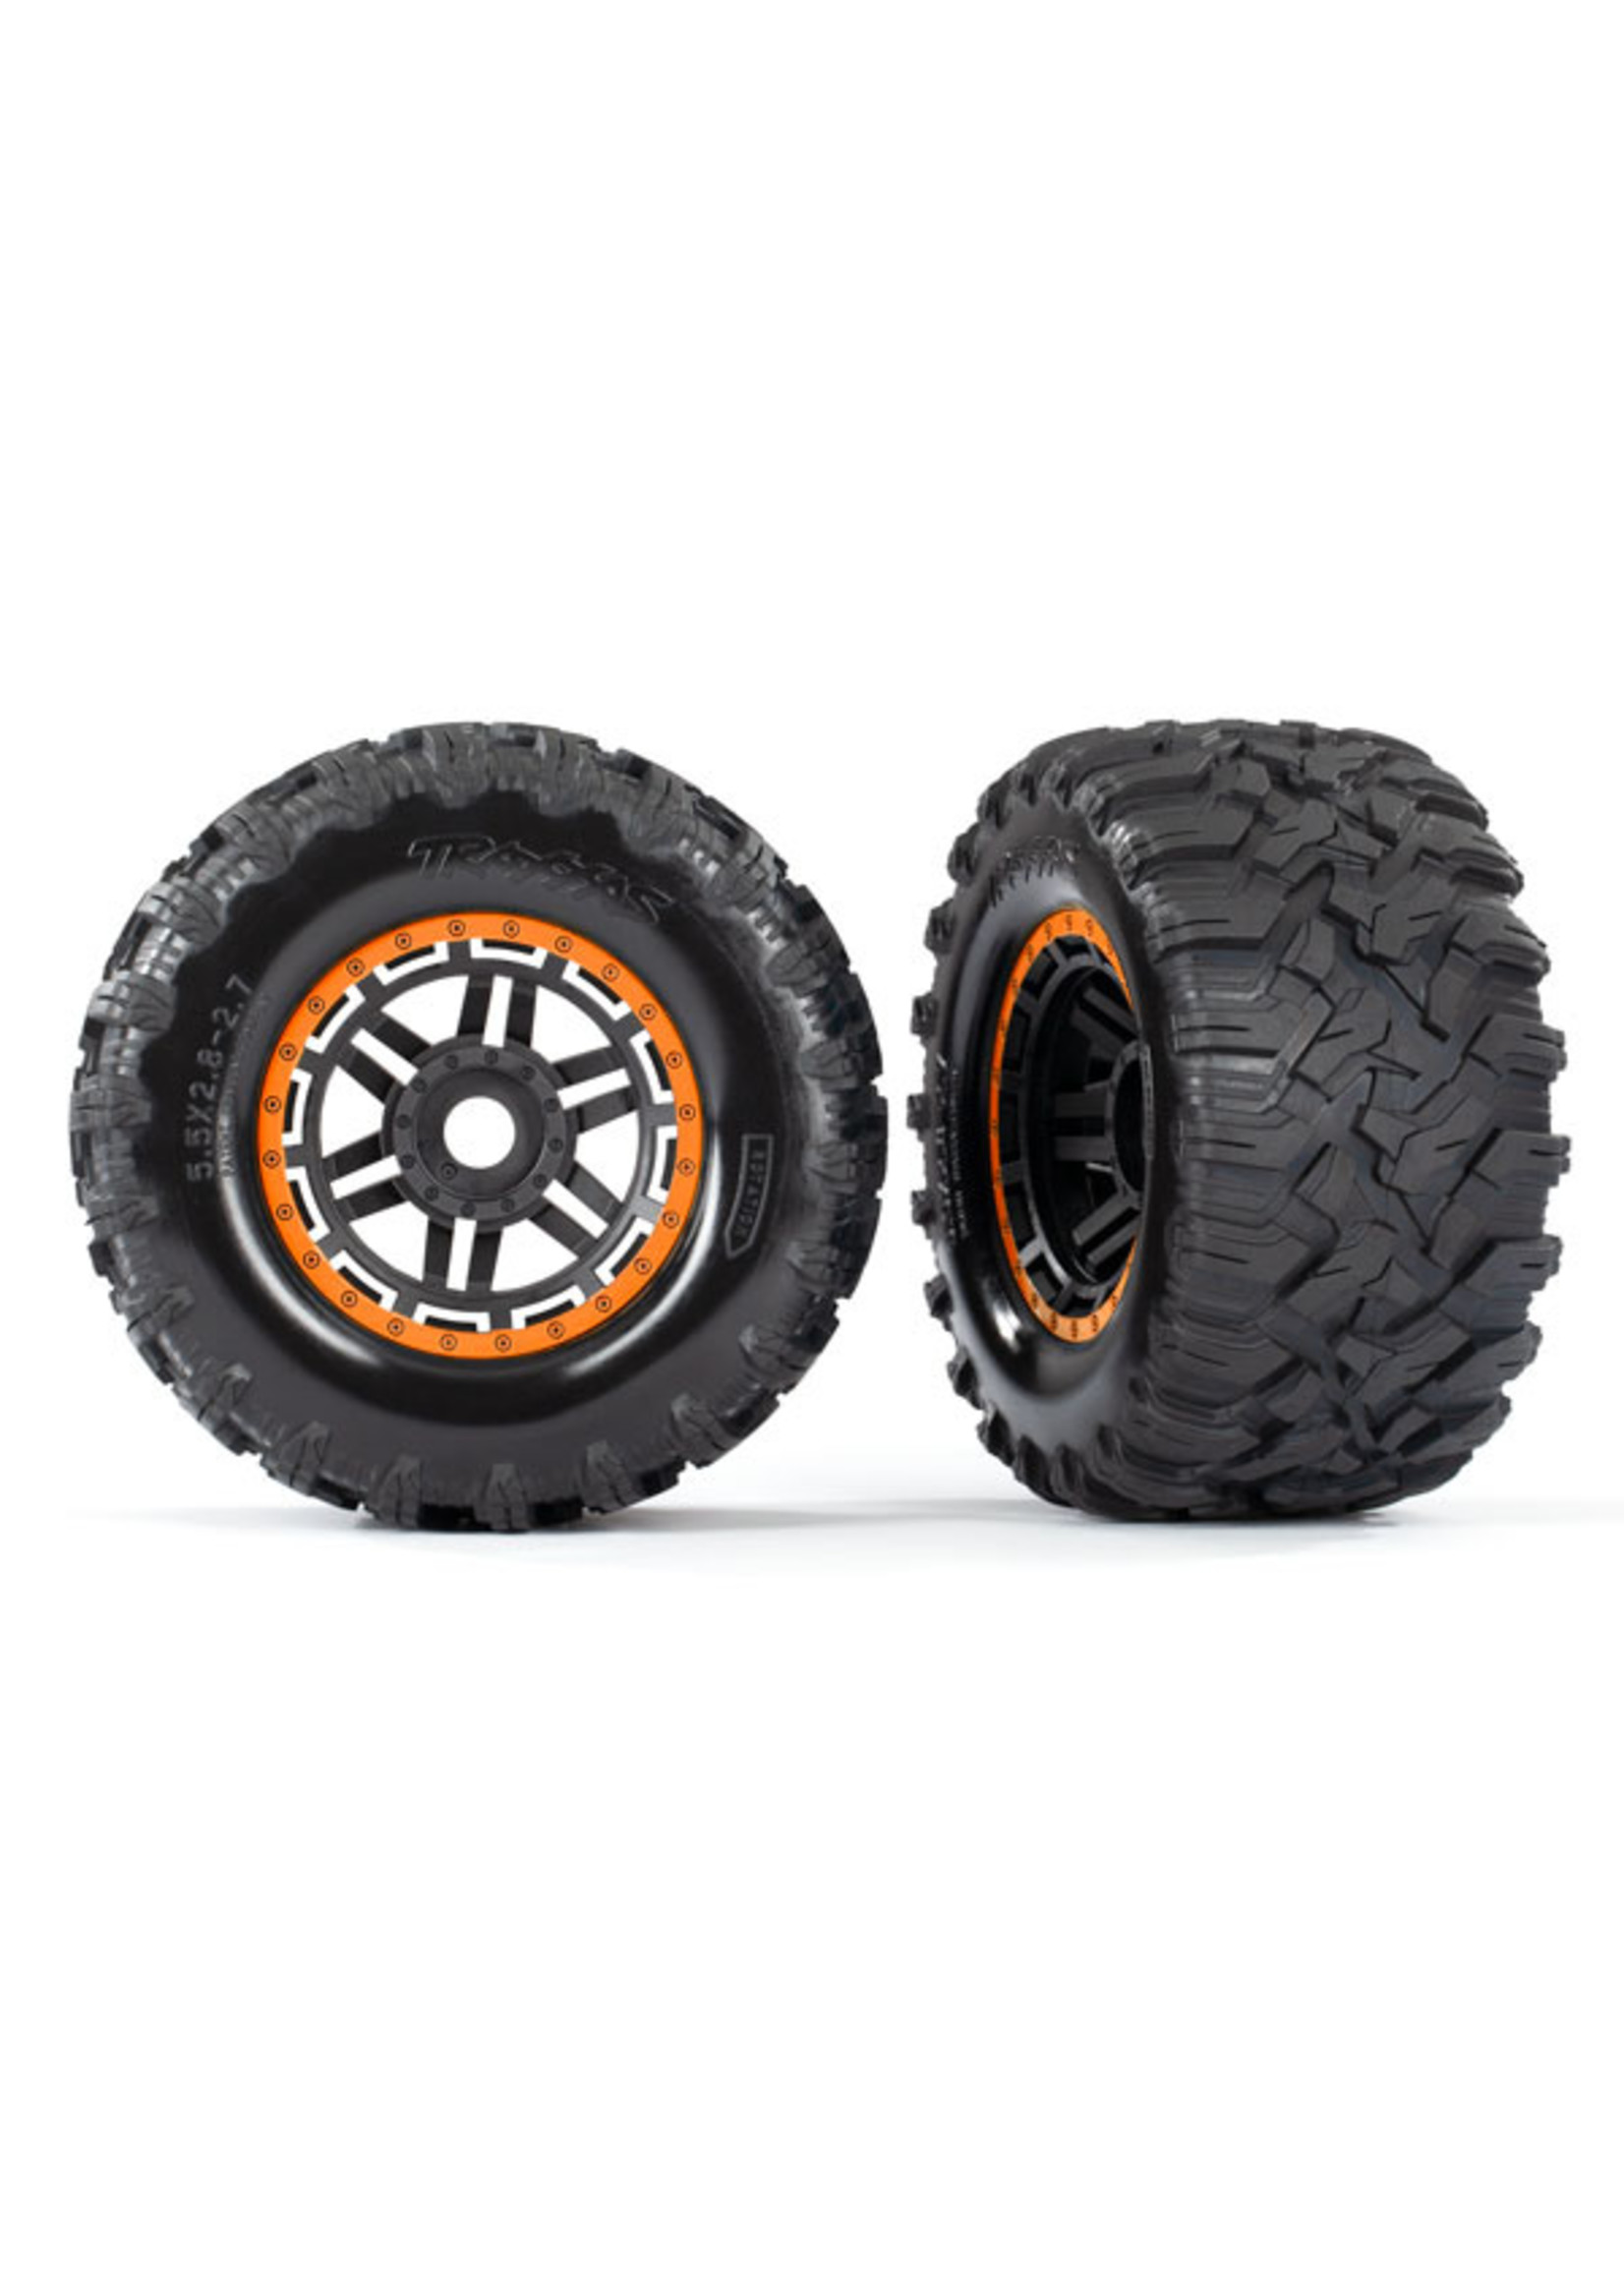 Traxxas TRA8972T Traxxas Tires & wheels, assembled, glued (black, orange beadlock style wheels, Maxx MT tires, foam inserts) (2) (17mm splined) (TSM rated)